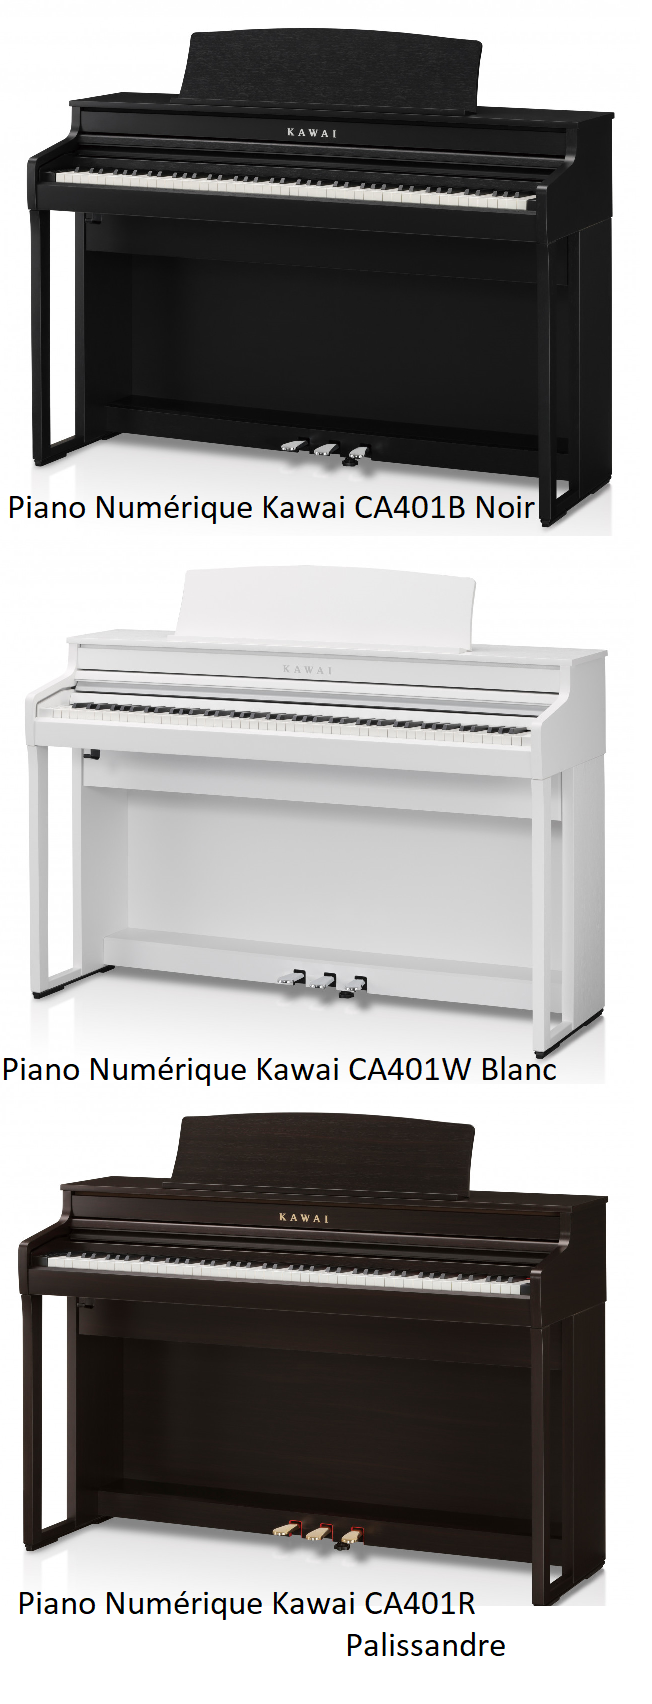 Piano Numérique Kawai CA401 - Voir en grand